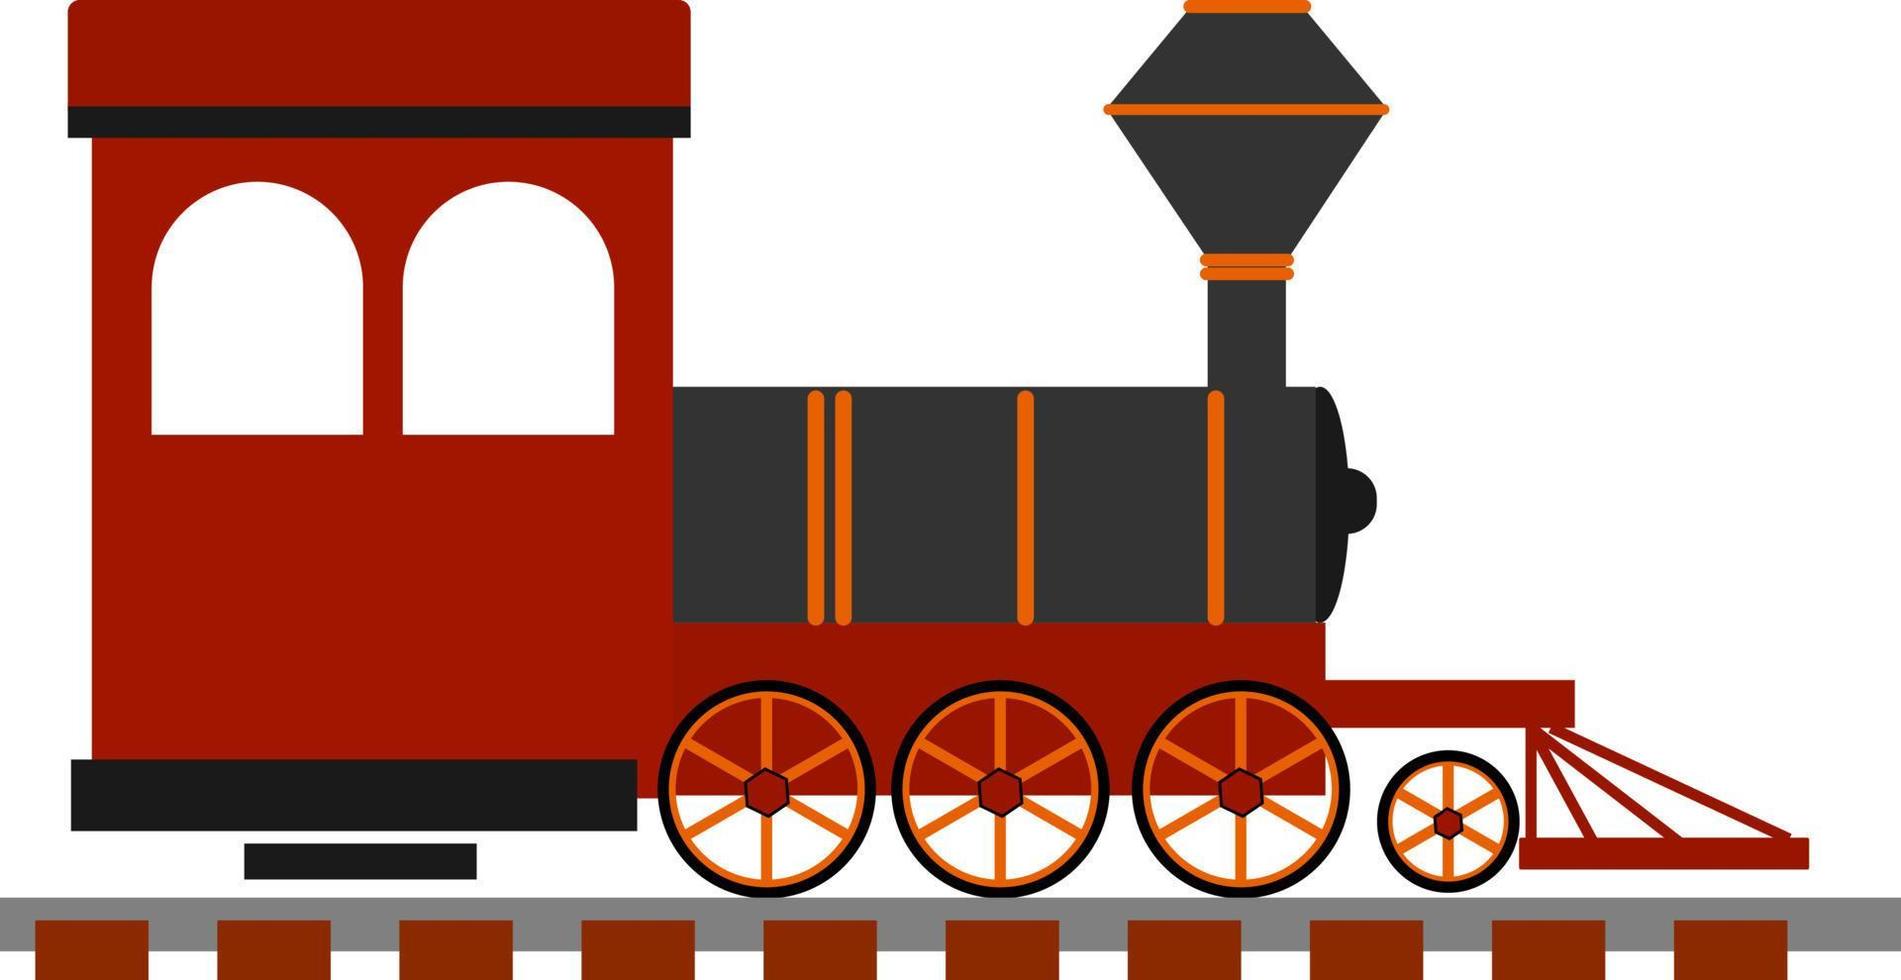 Red old locomotive, illustration, vector on white background.